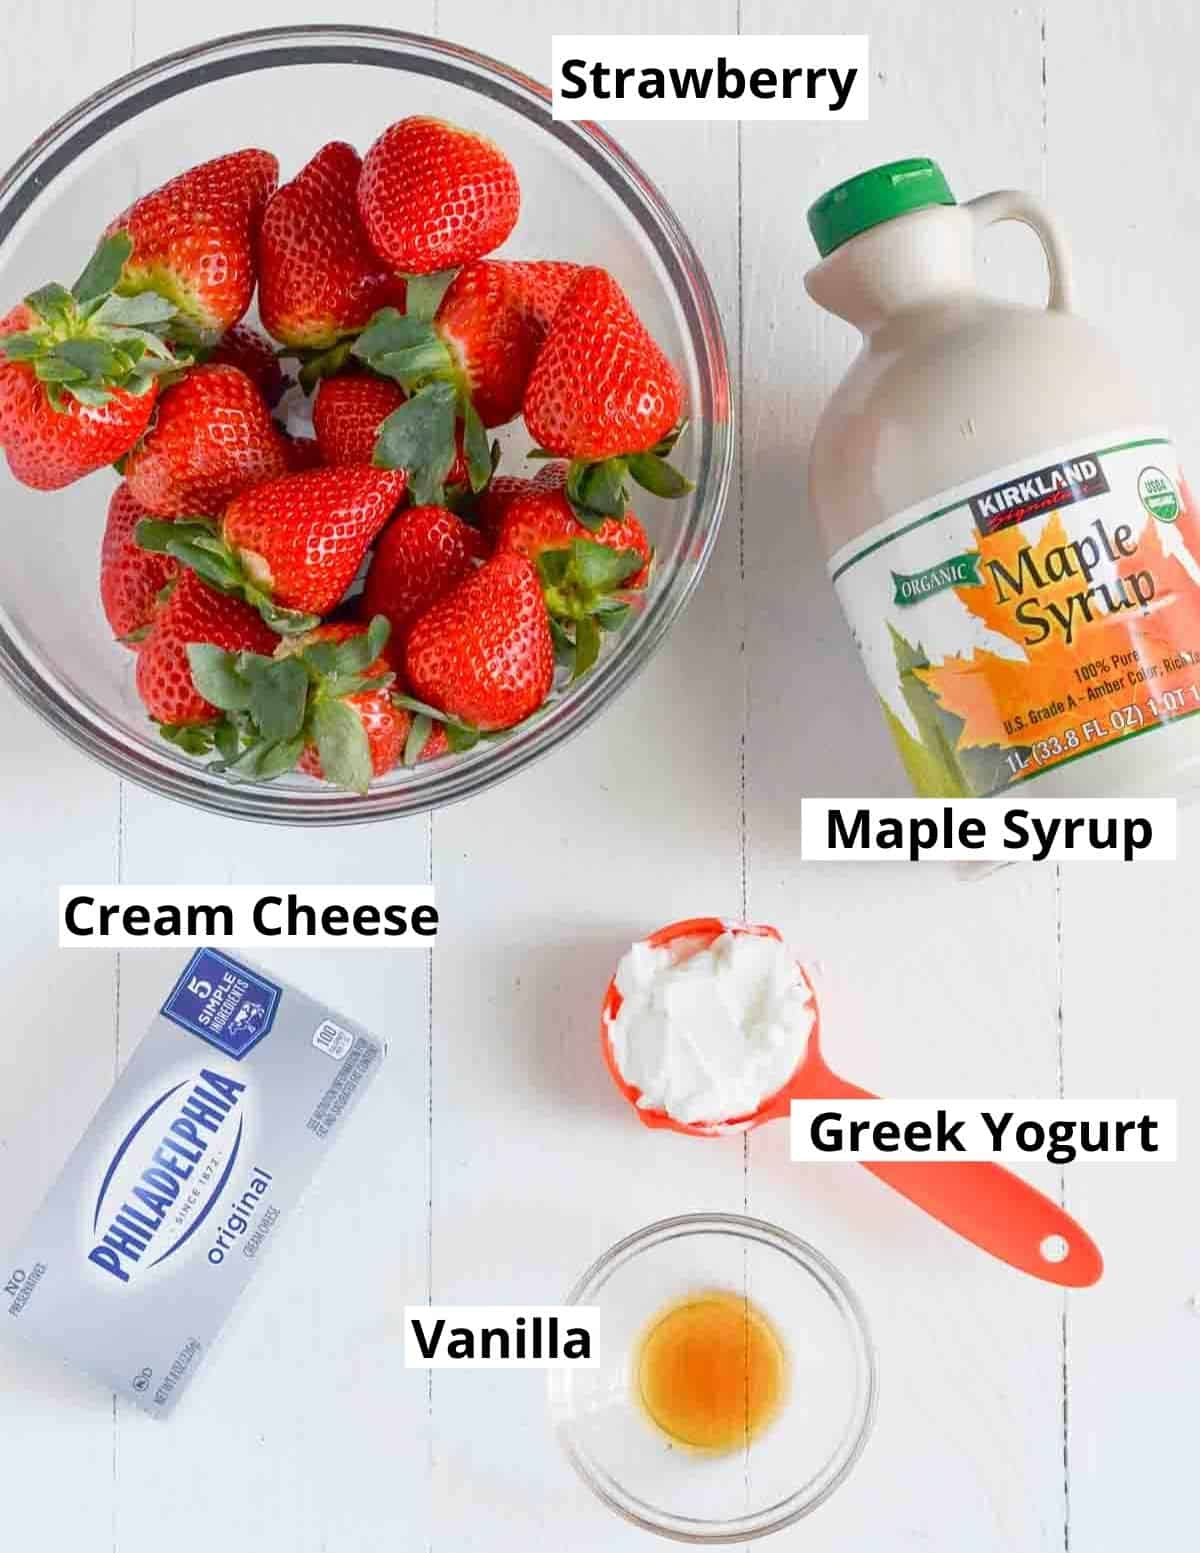 List of ingredients to make deviled strawberries